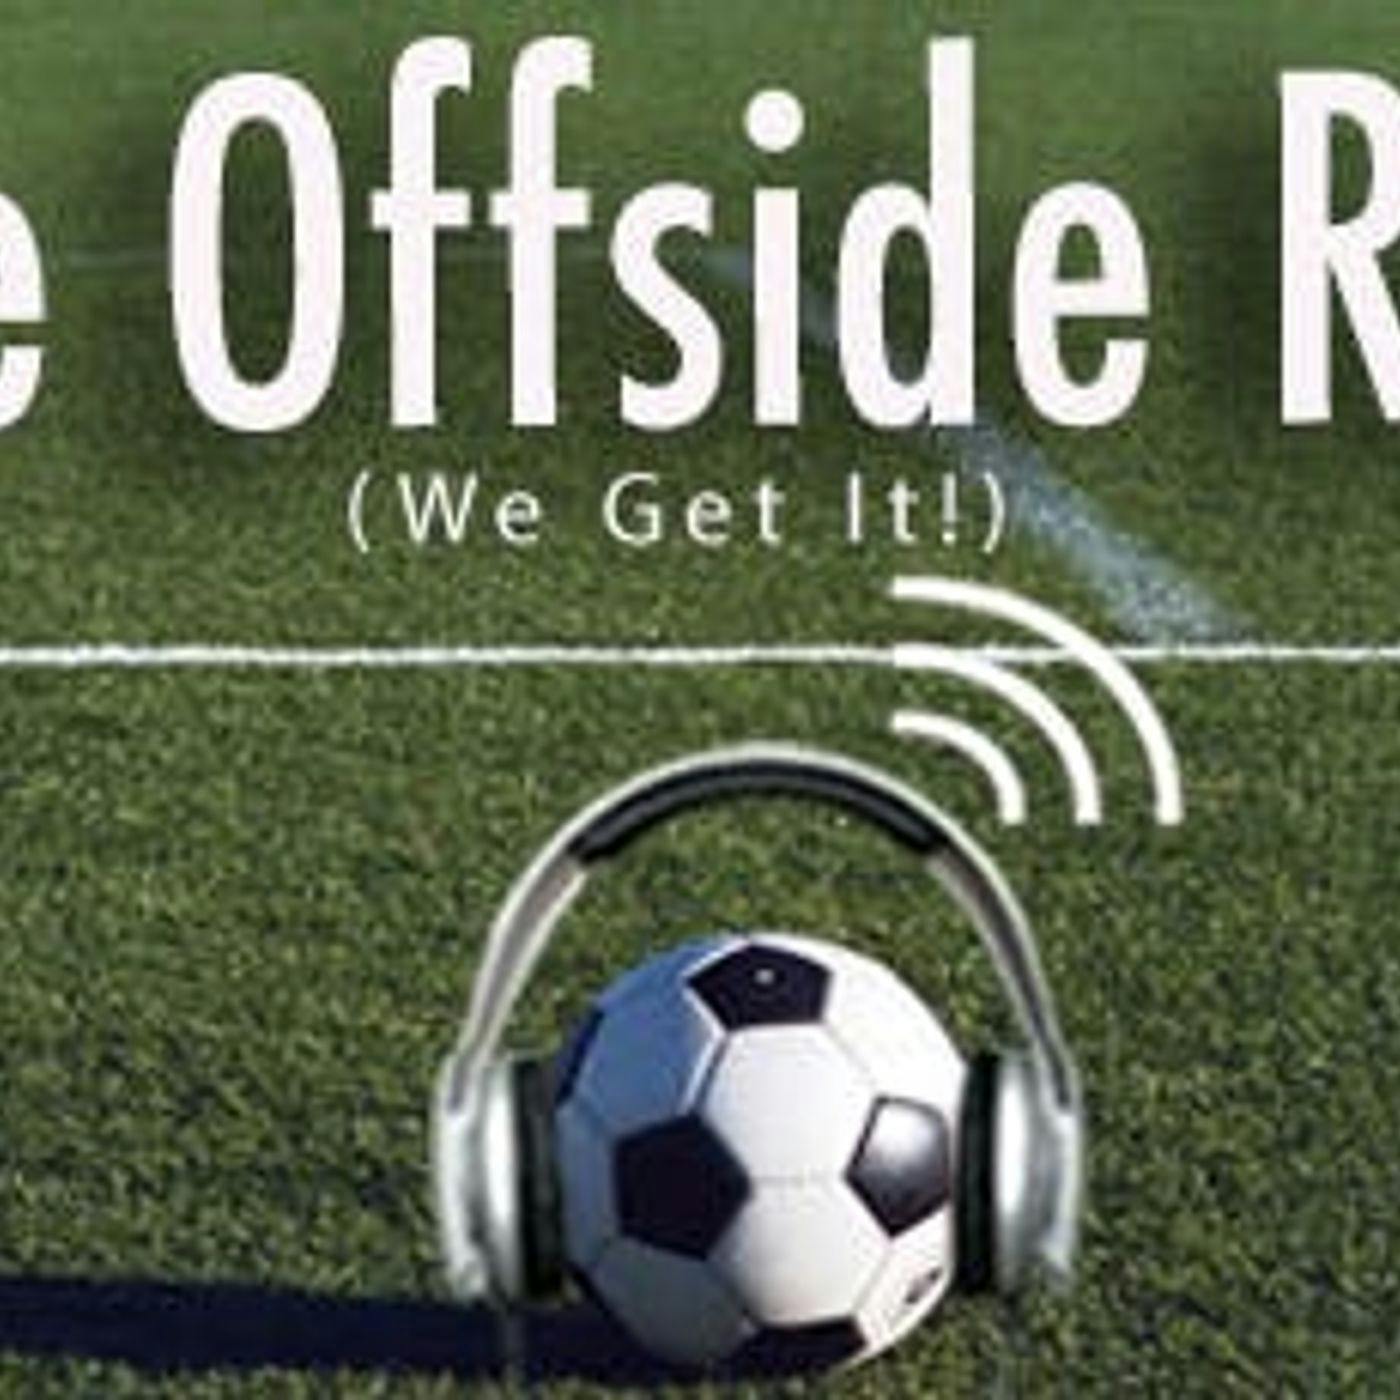 The Offside Rule 2013/14 Episode 32